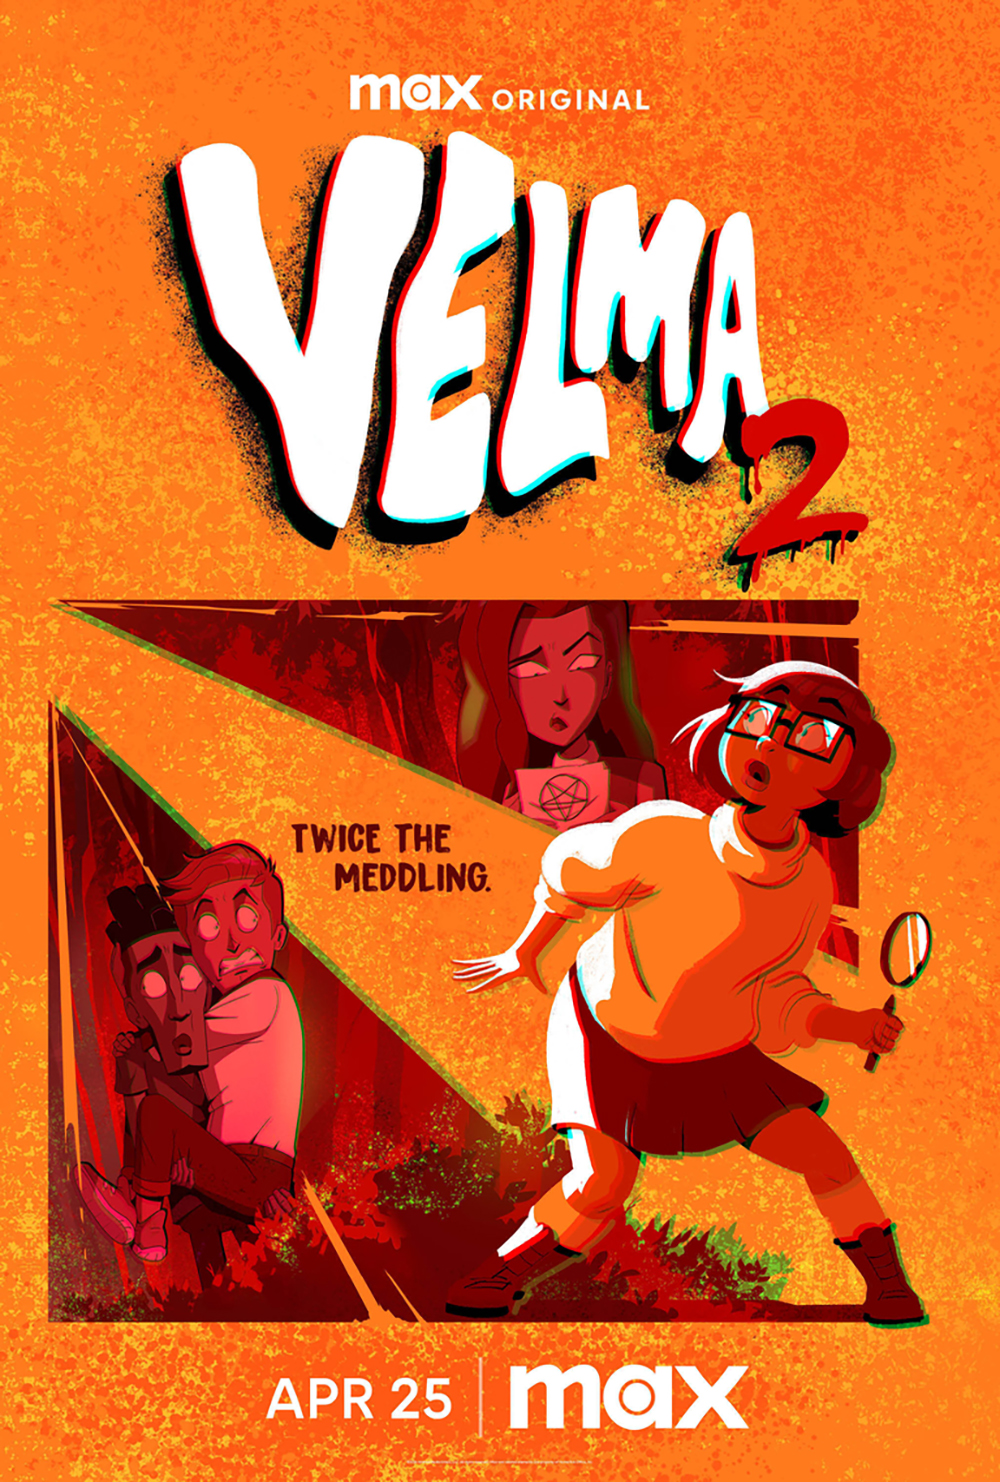 Velma Season 2 on HBO Max